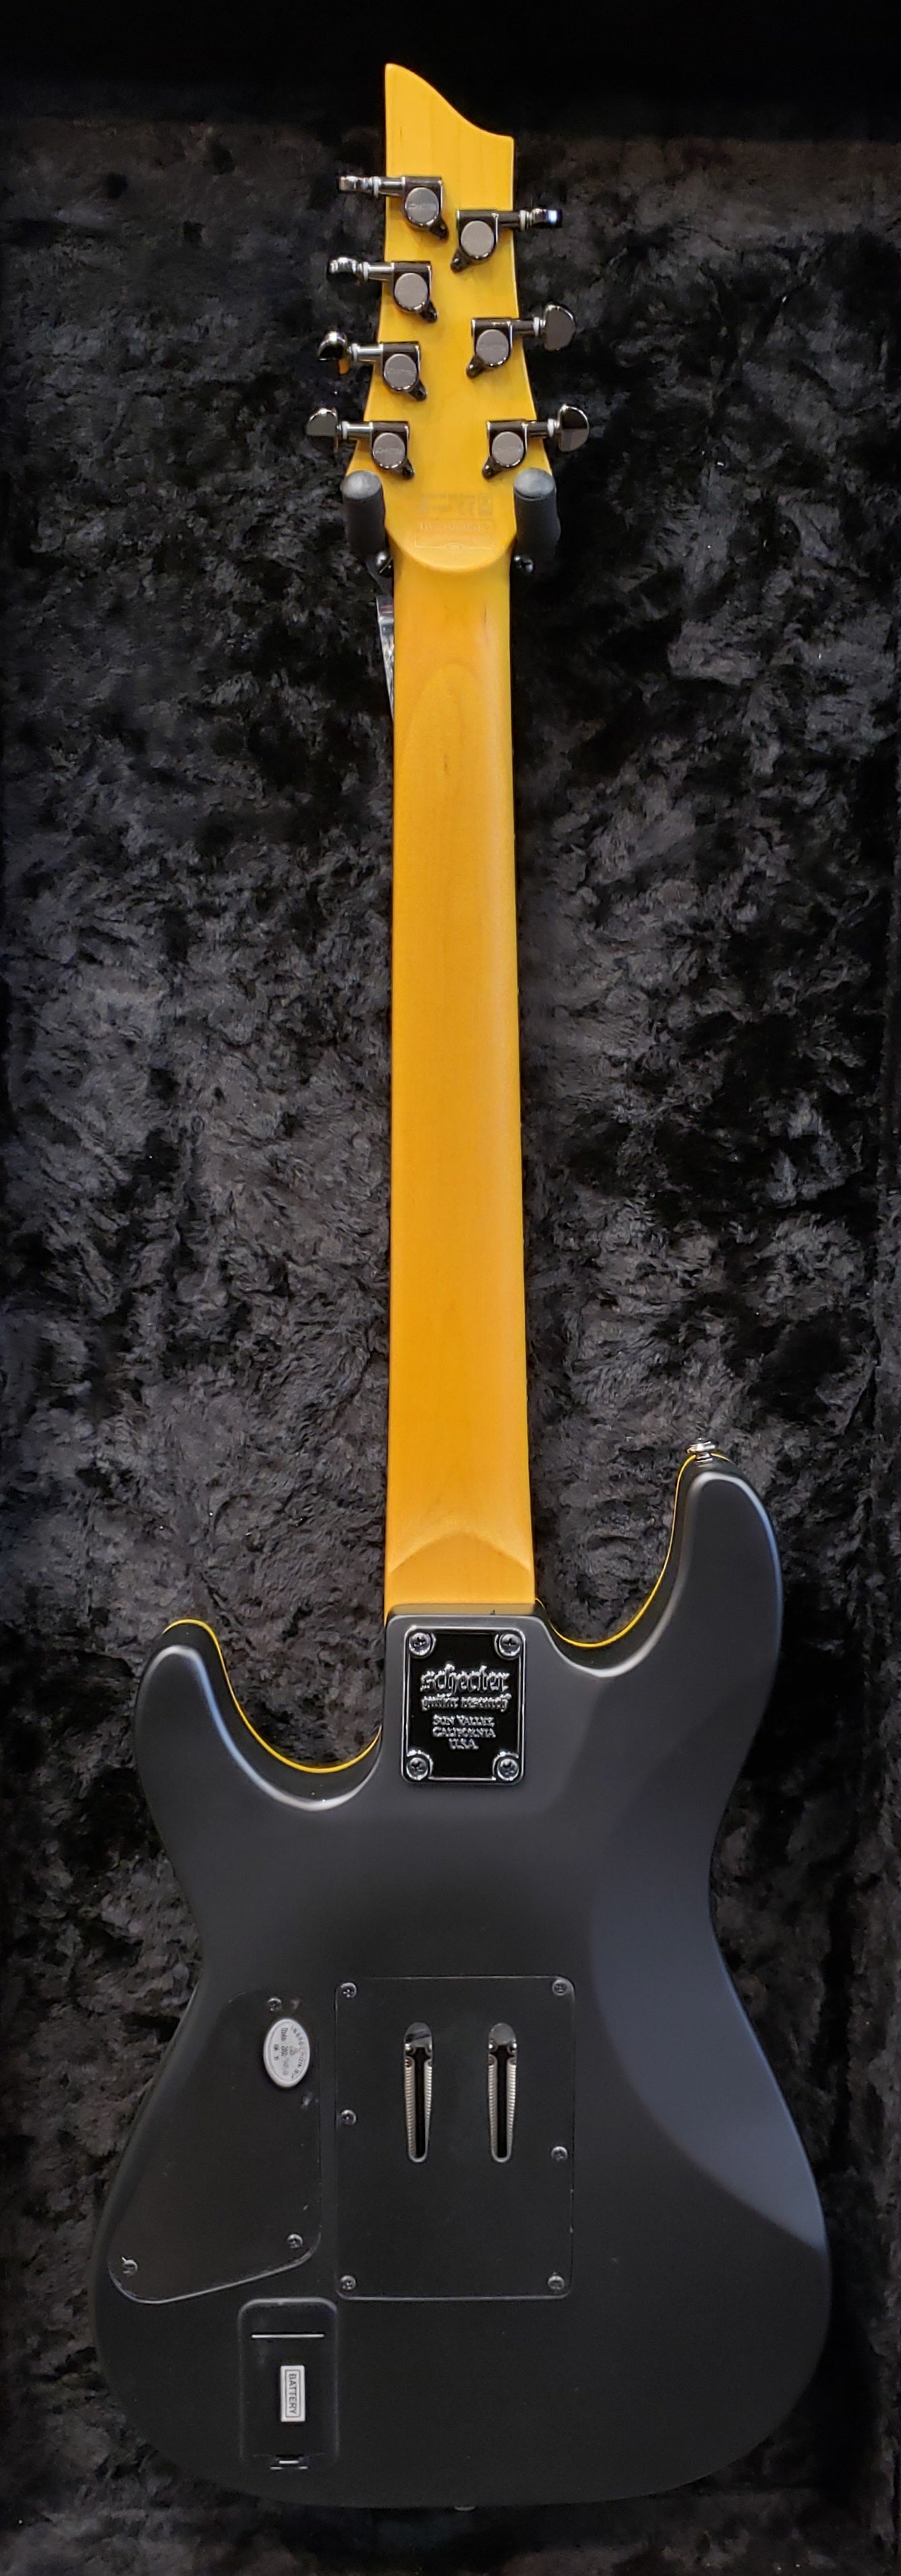 Schecter DEMON-7-FR-SBK 7 string Satin Black Guitar with Duncan Designed HB-105 3214-SHC SERIAL NUMBER IW21060512 - 7.9 LBS